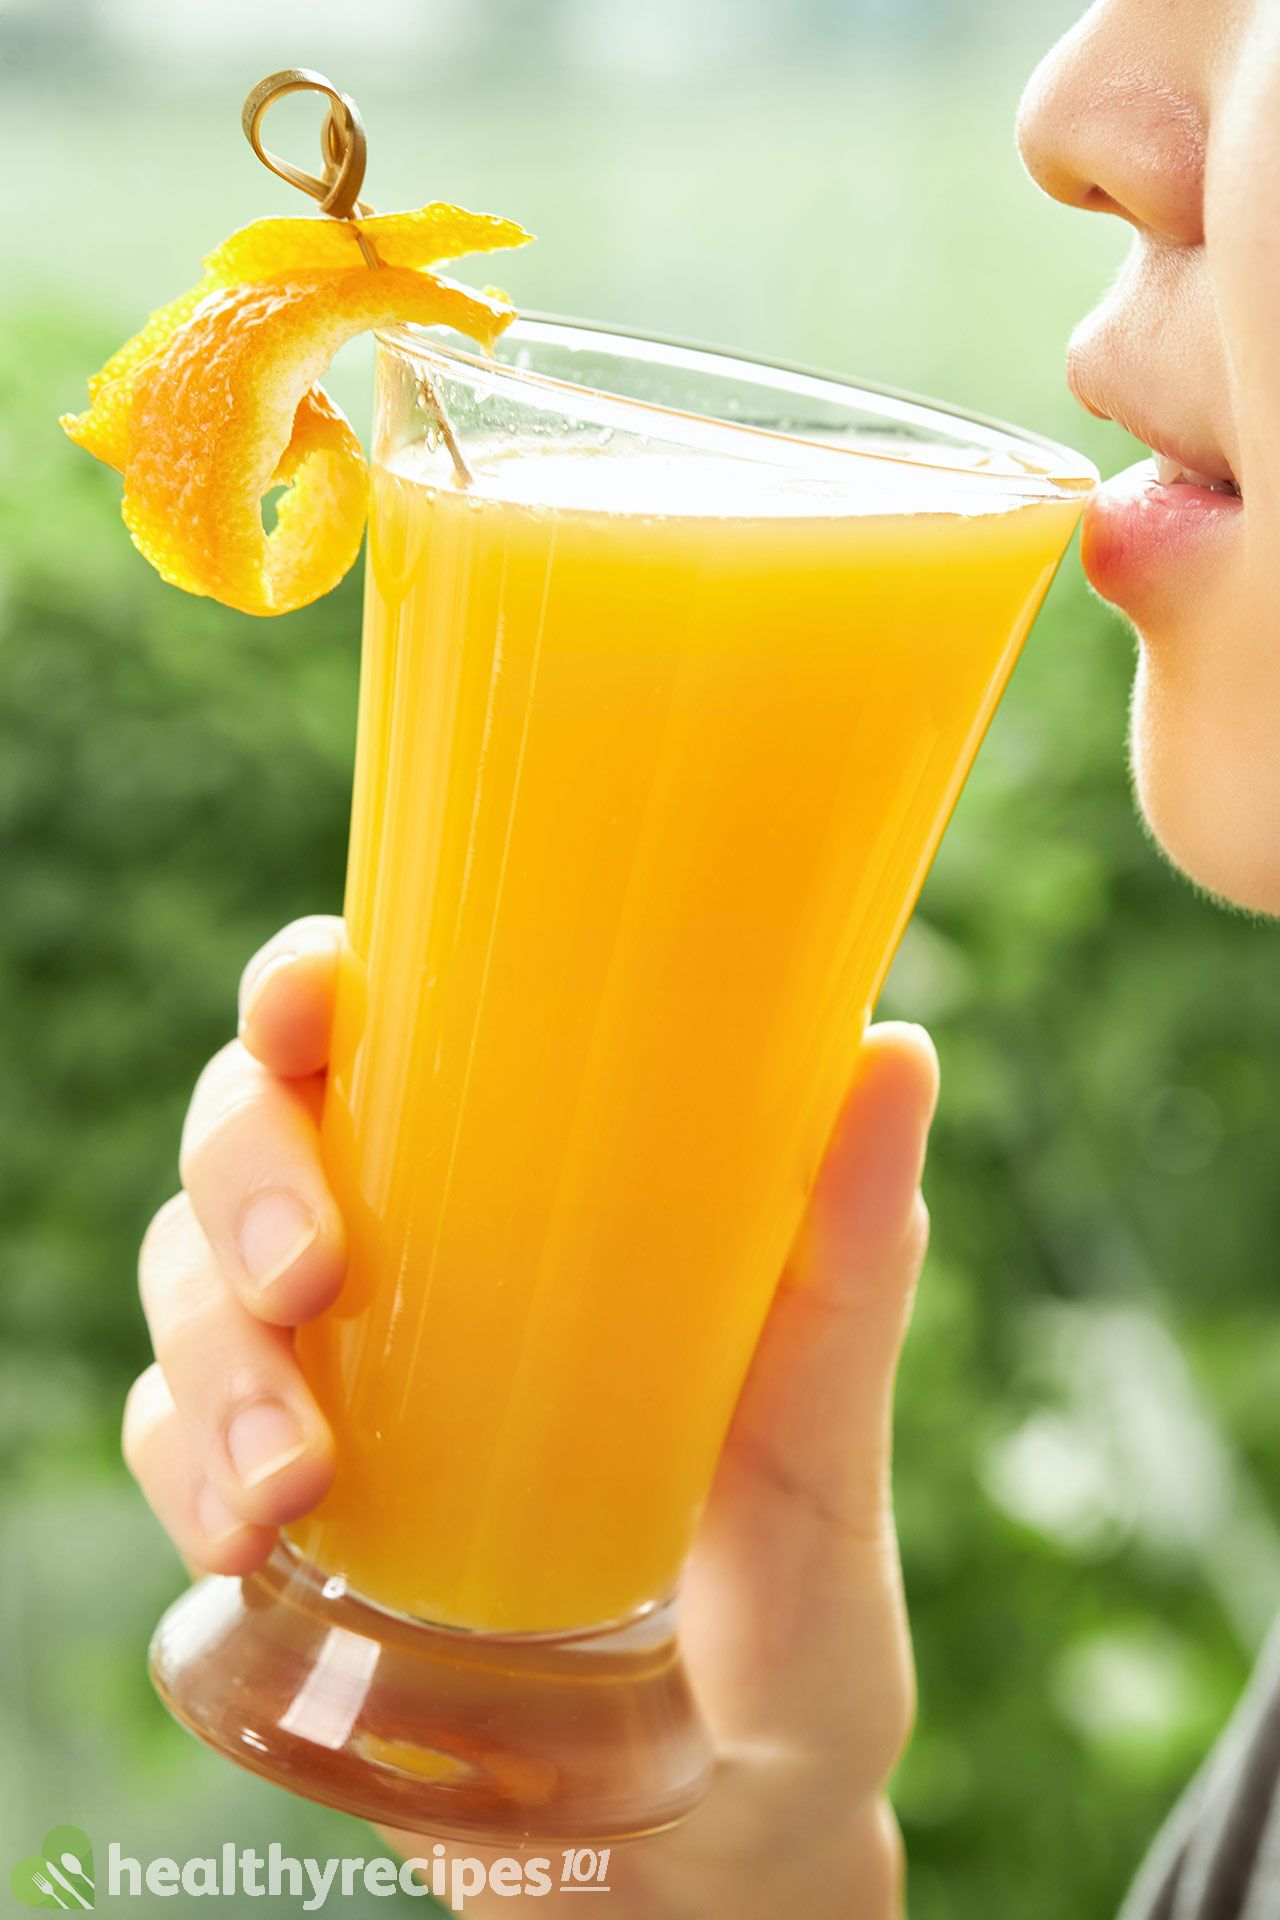 Is Drinking orange juice Apple Cider Vinegar and honey Healthy